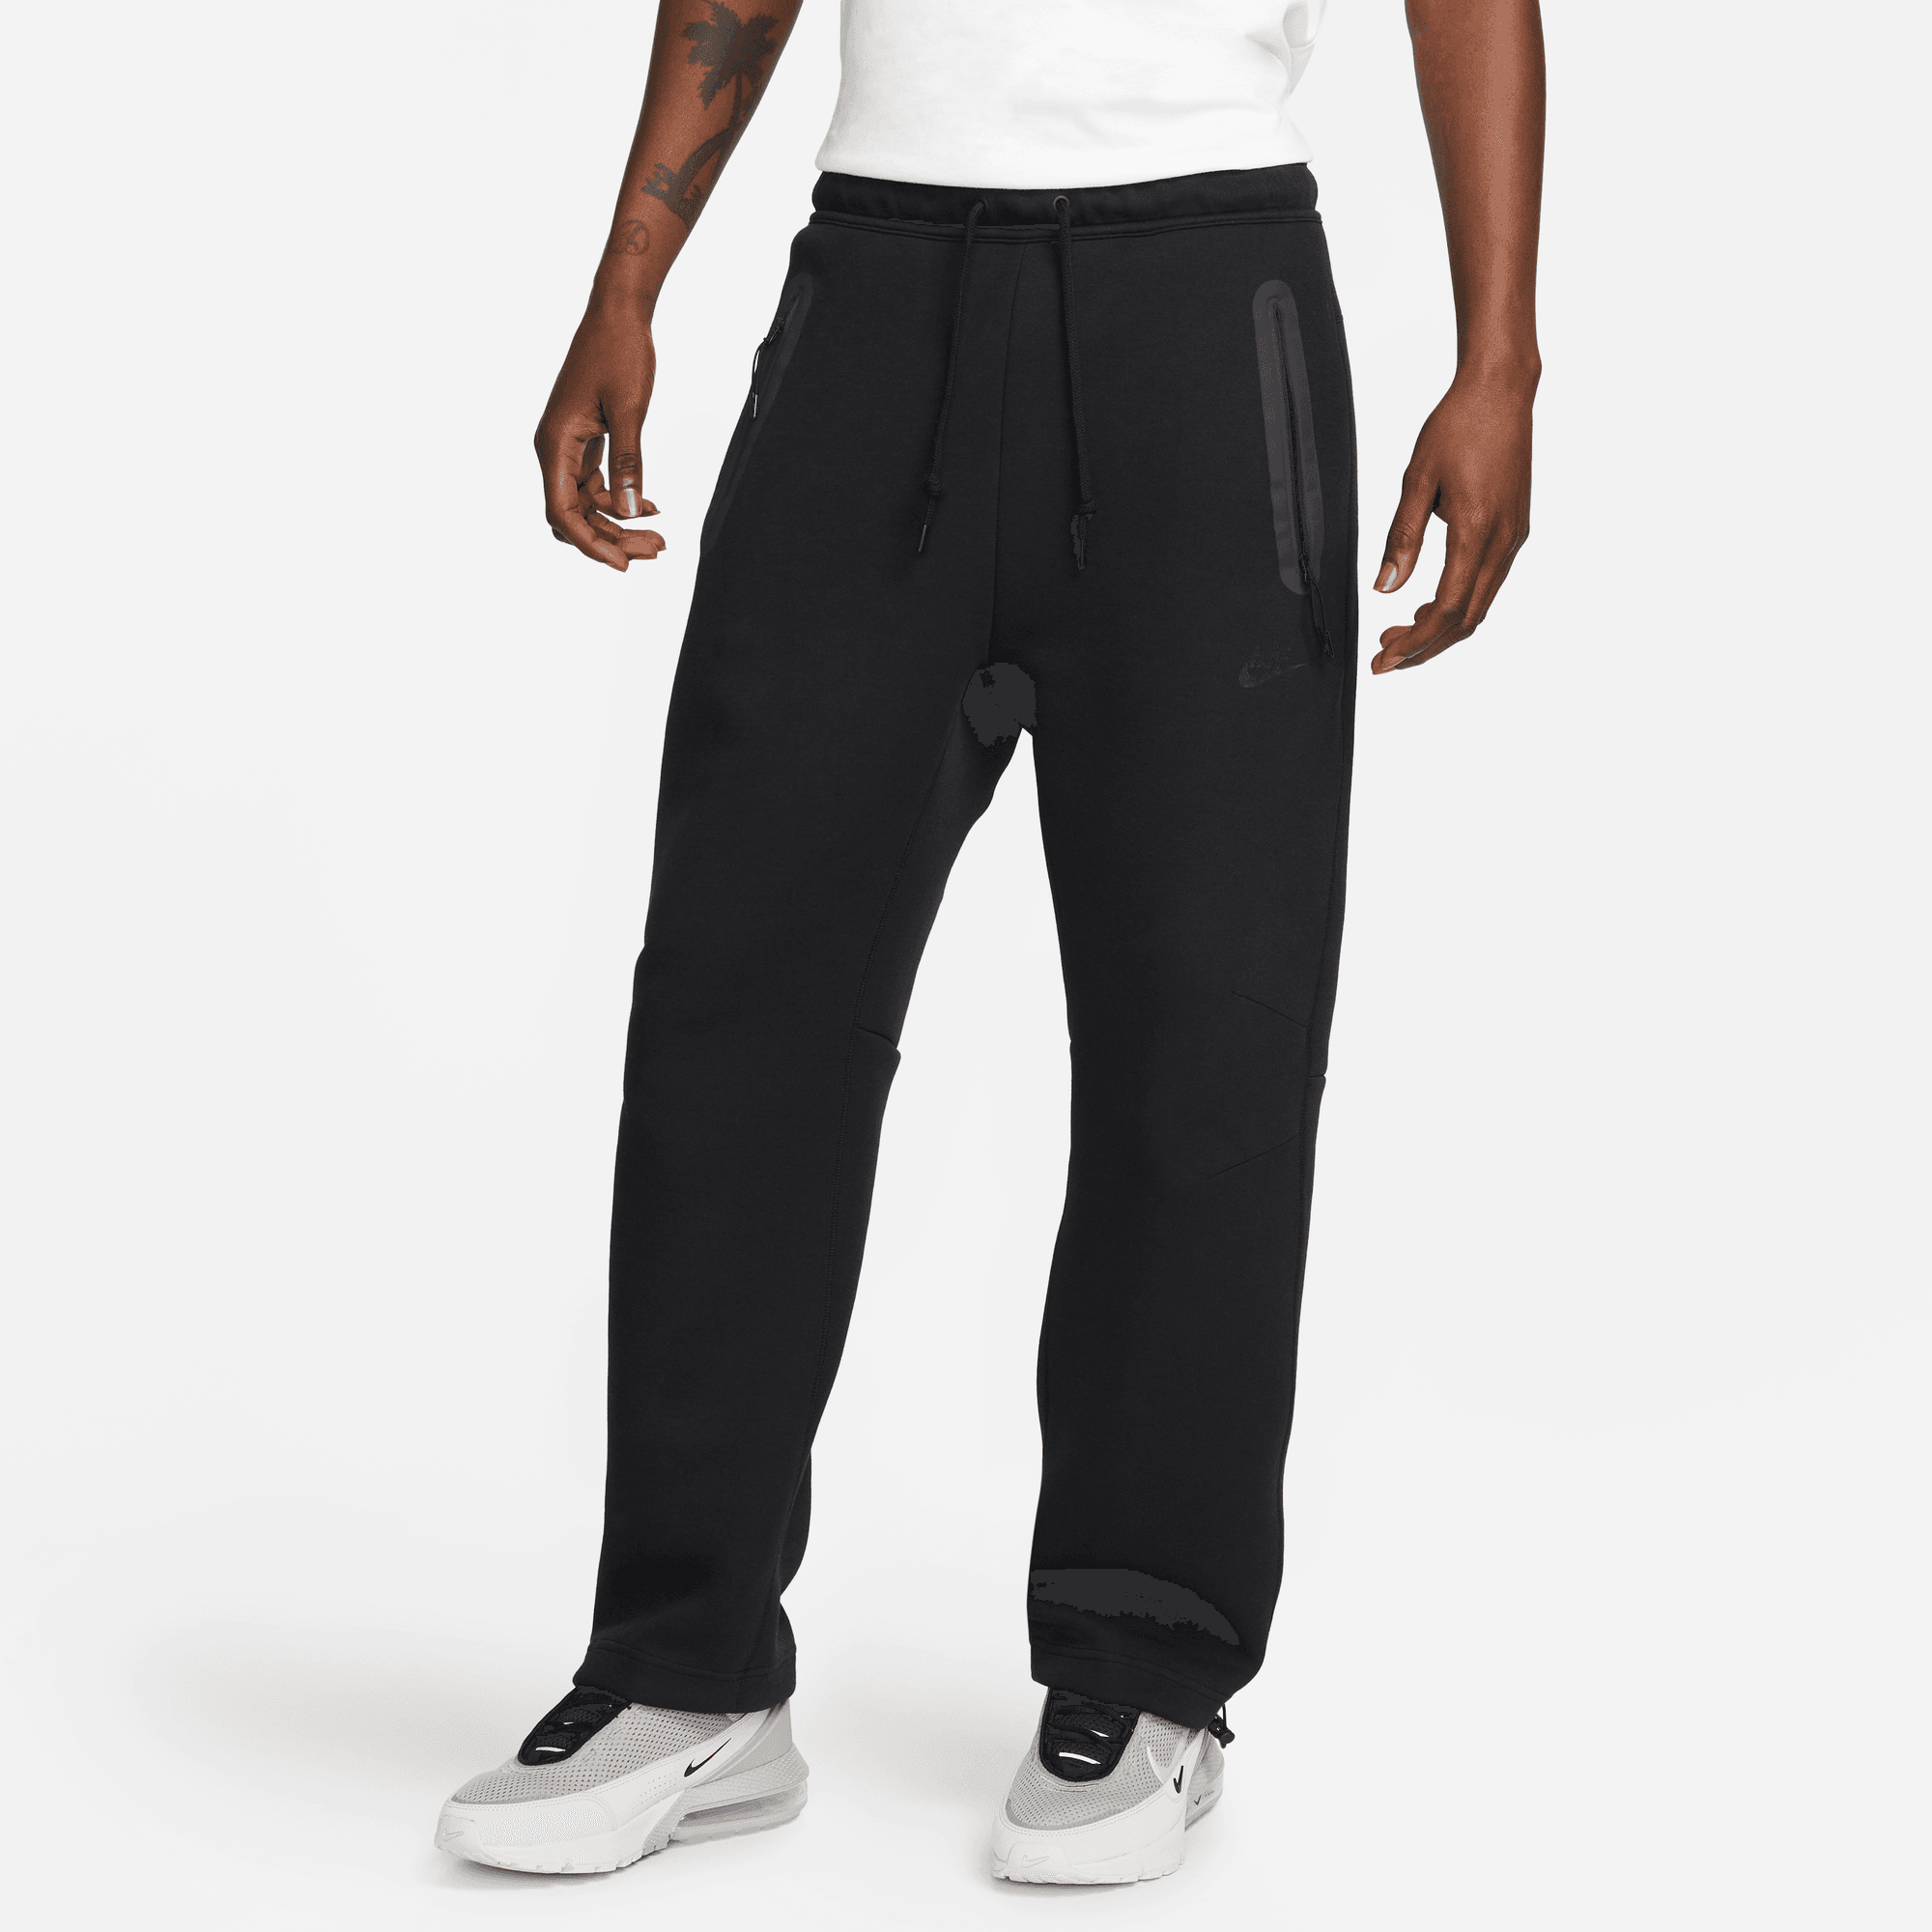 Jeans & Pants, Air Jordan Nike Black Sweatpants Men's Fleece XXL